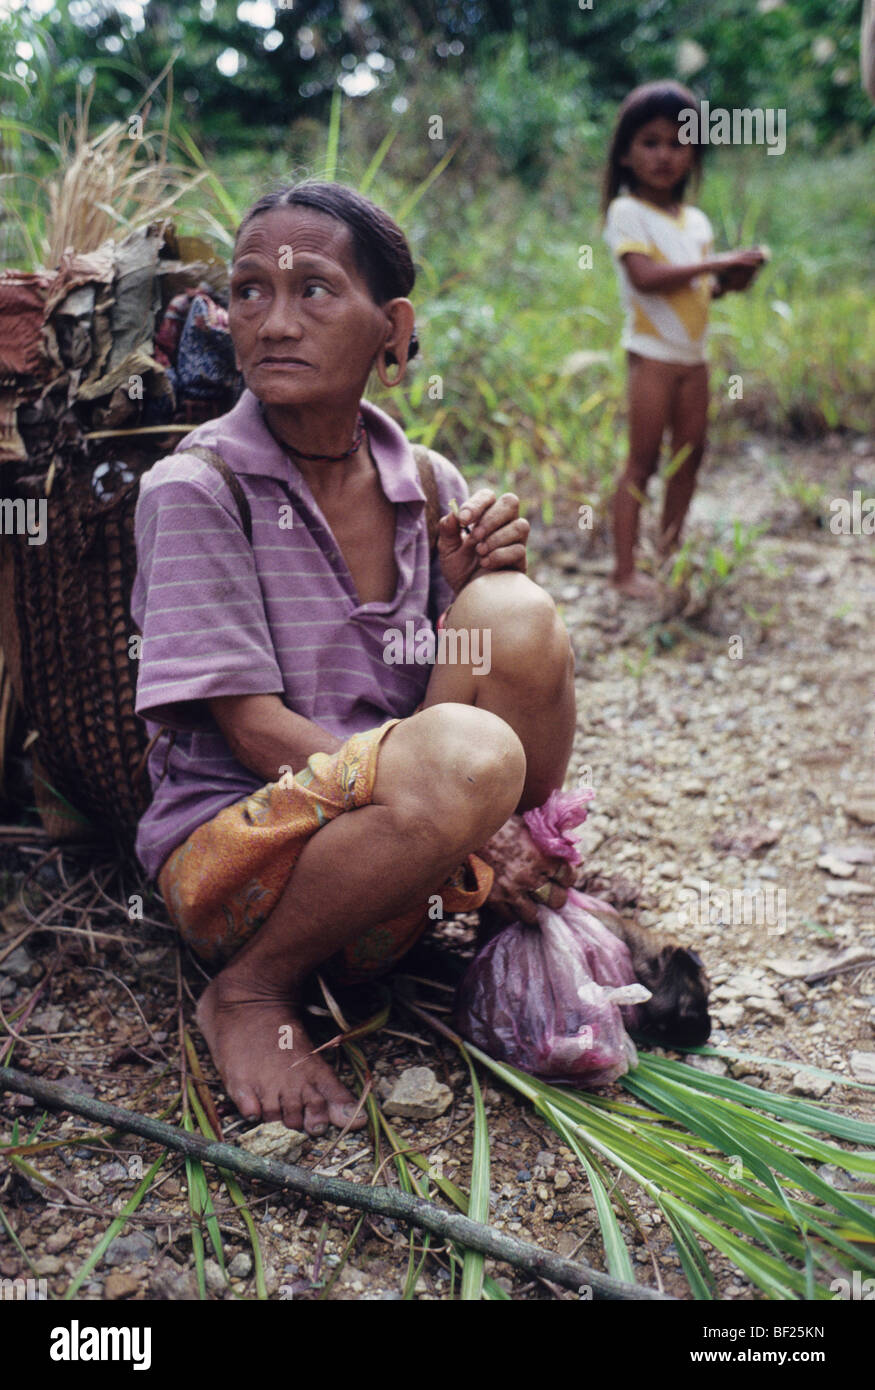 Indigenen Dayak Kelabit Frau mit Rattan Rucksack, Tochter junge Gilr in der Nähe, Sarawak Borneo Malaysia Stockfoto